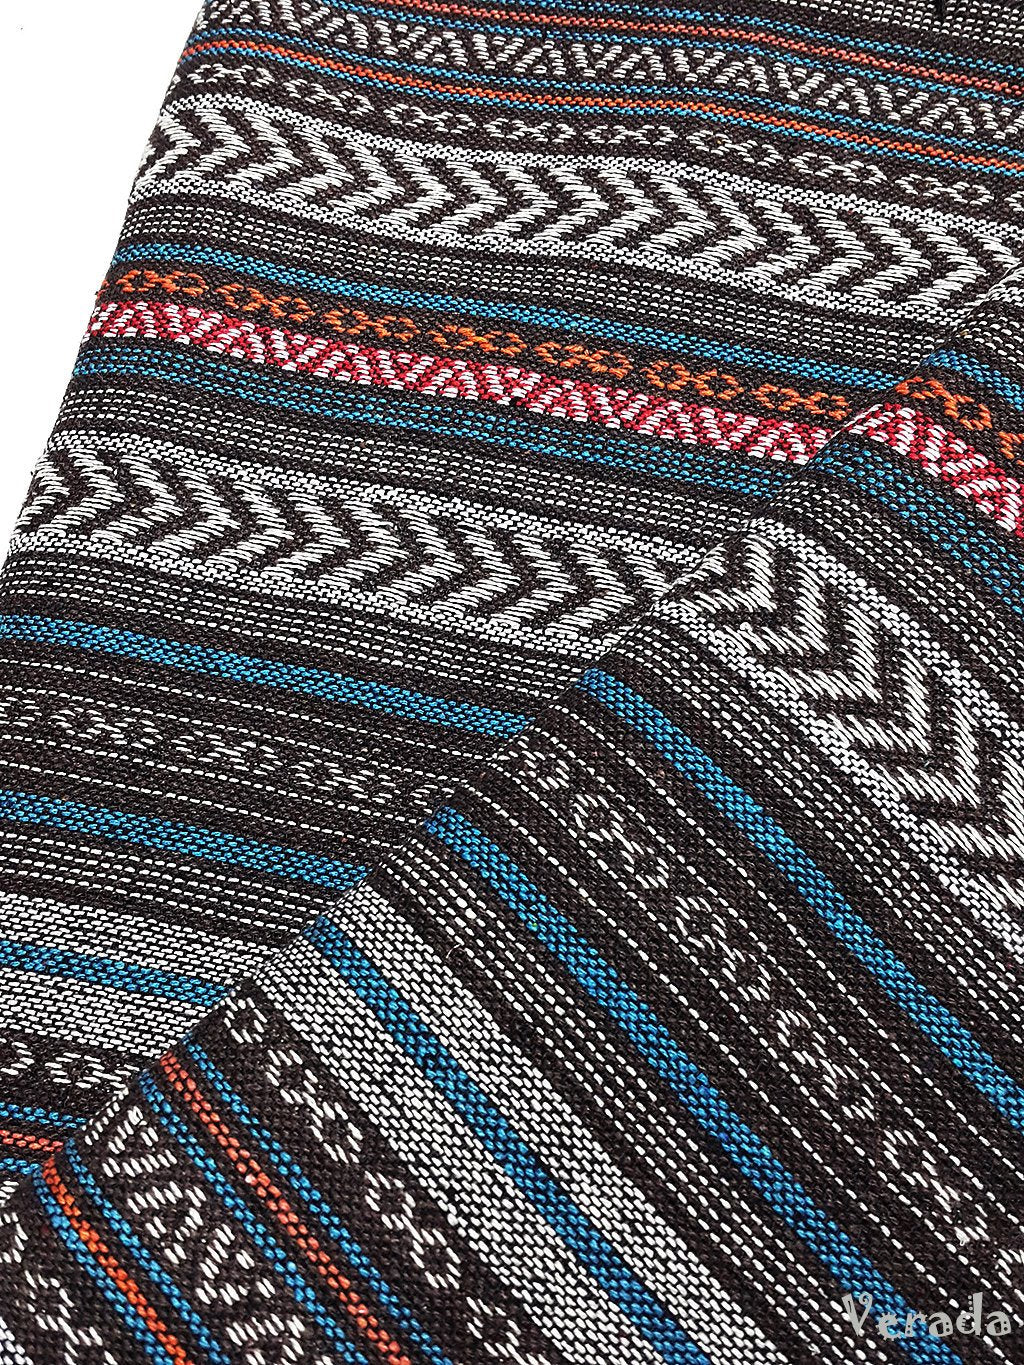 Thai Woven Cotton Tribal Fabric Textile 1/2 yard (WF121)